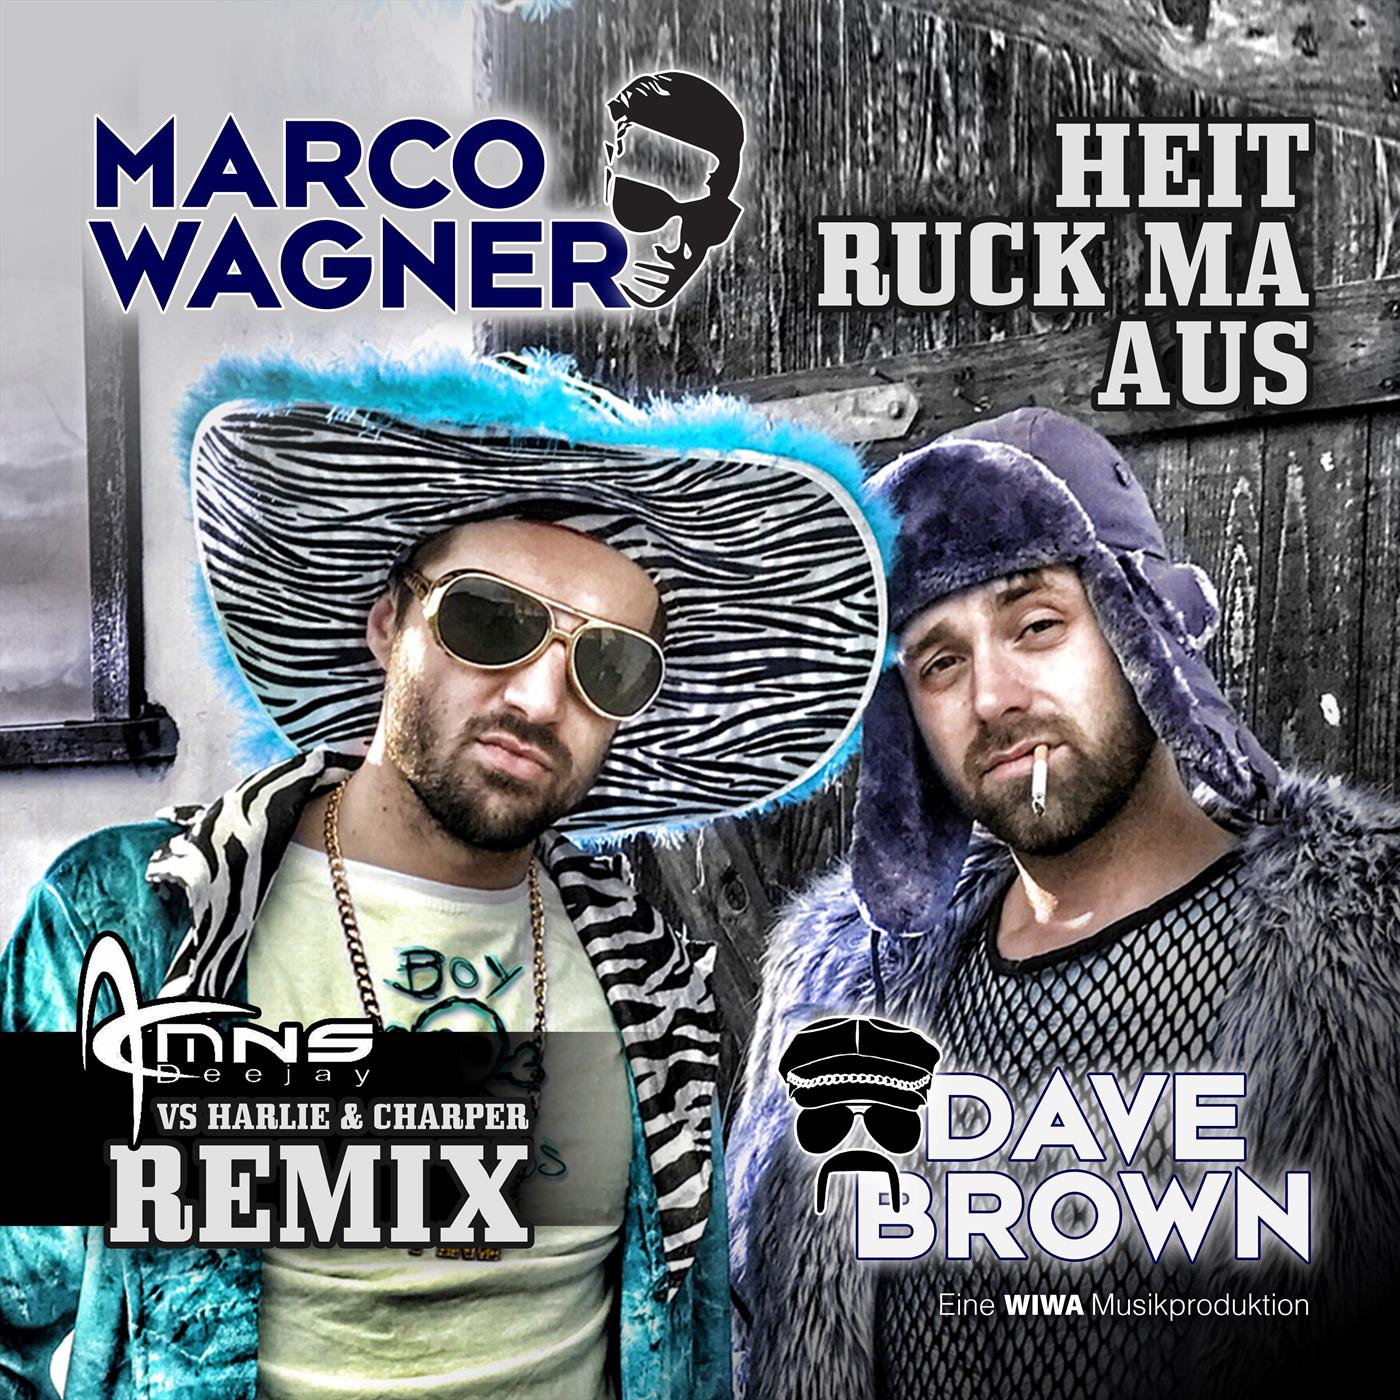 Heit Ruck Ma Aus (DJ MNS vs Harlie & Charper Remix Edit)